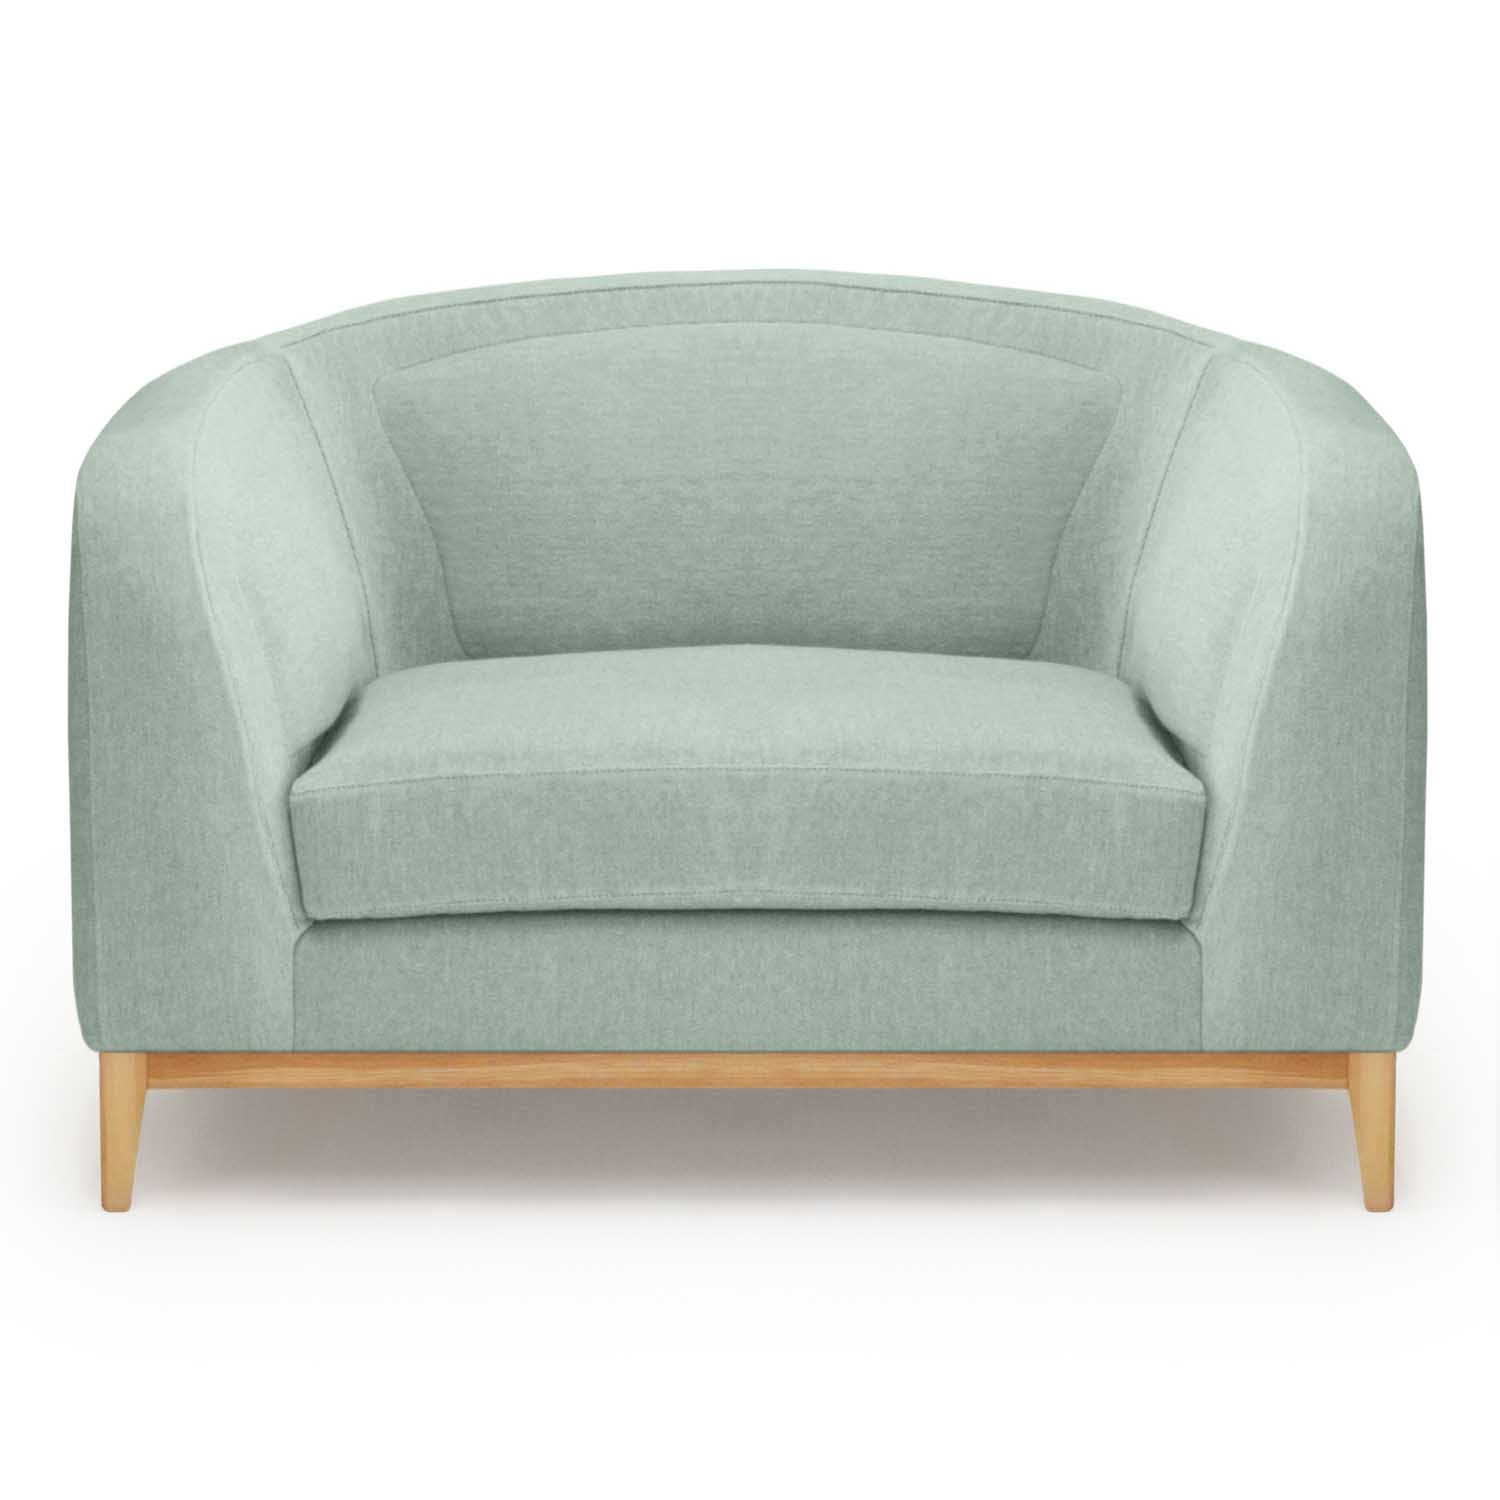 Contemporary Living Room Furniture, light green linen upholstery